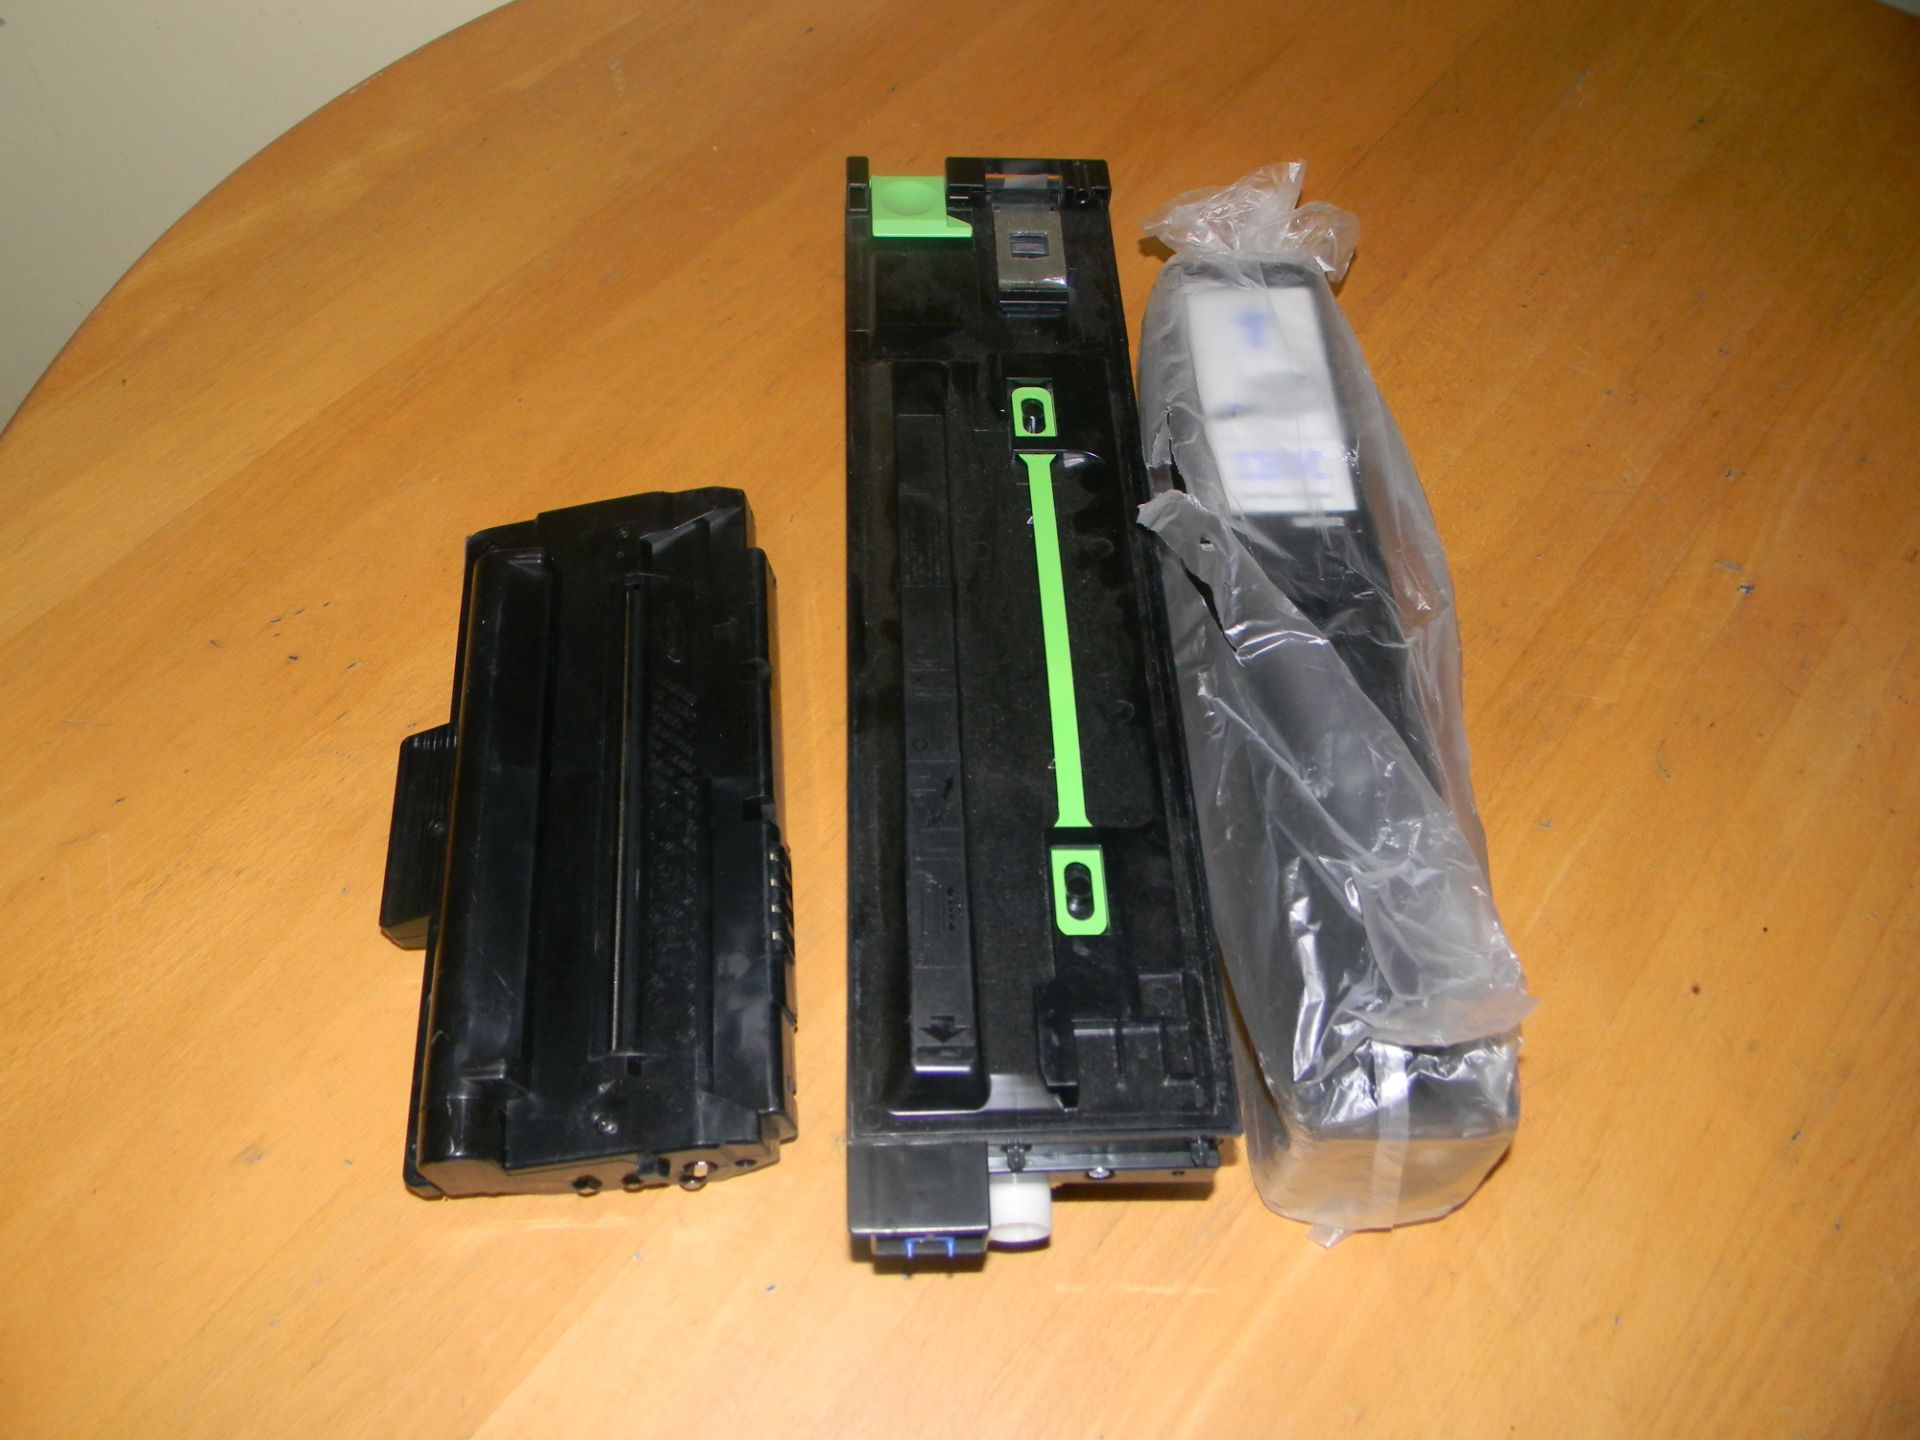 3 x Toner cartridges